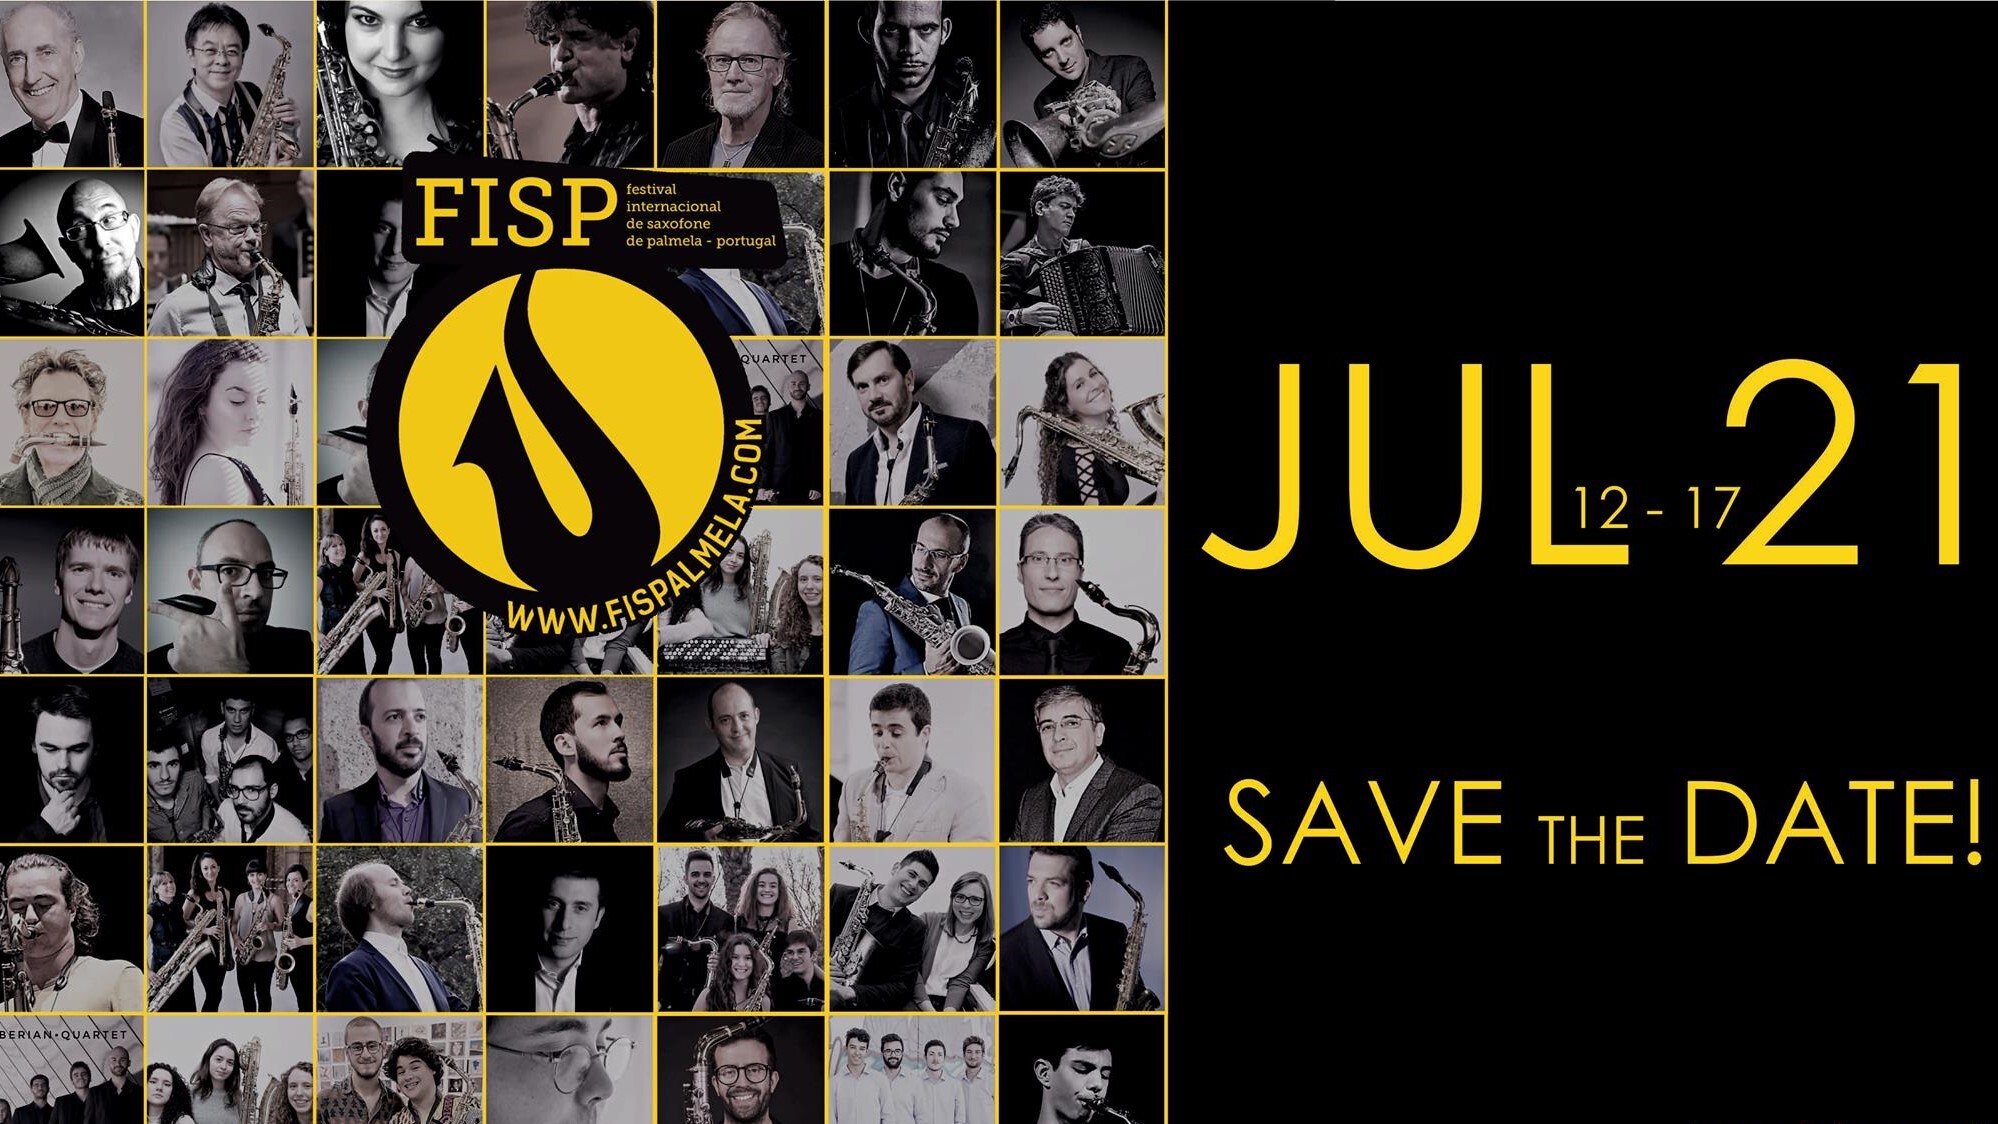 Município apoia FISP - Festival Internacional de Saxofone de Palmela  